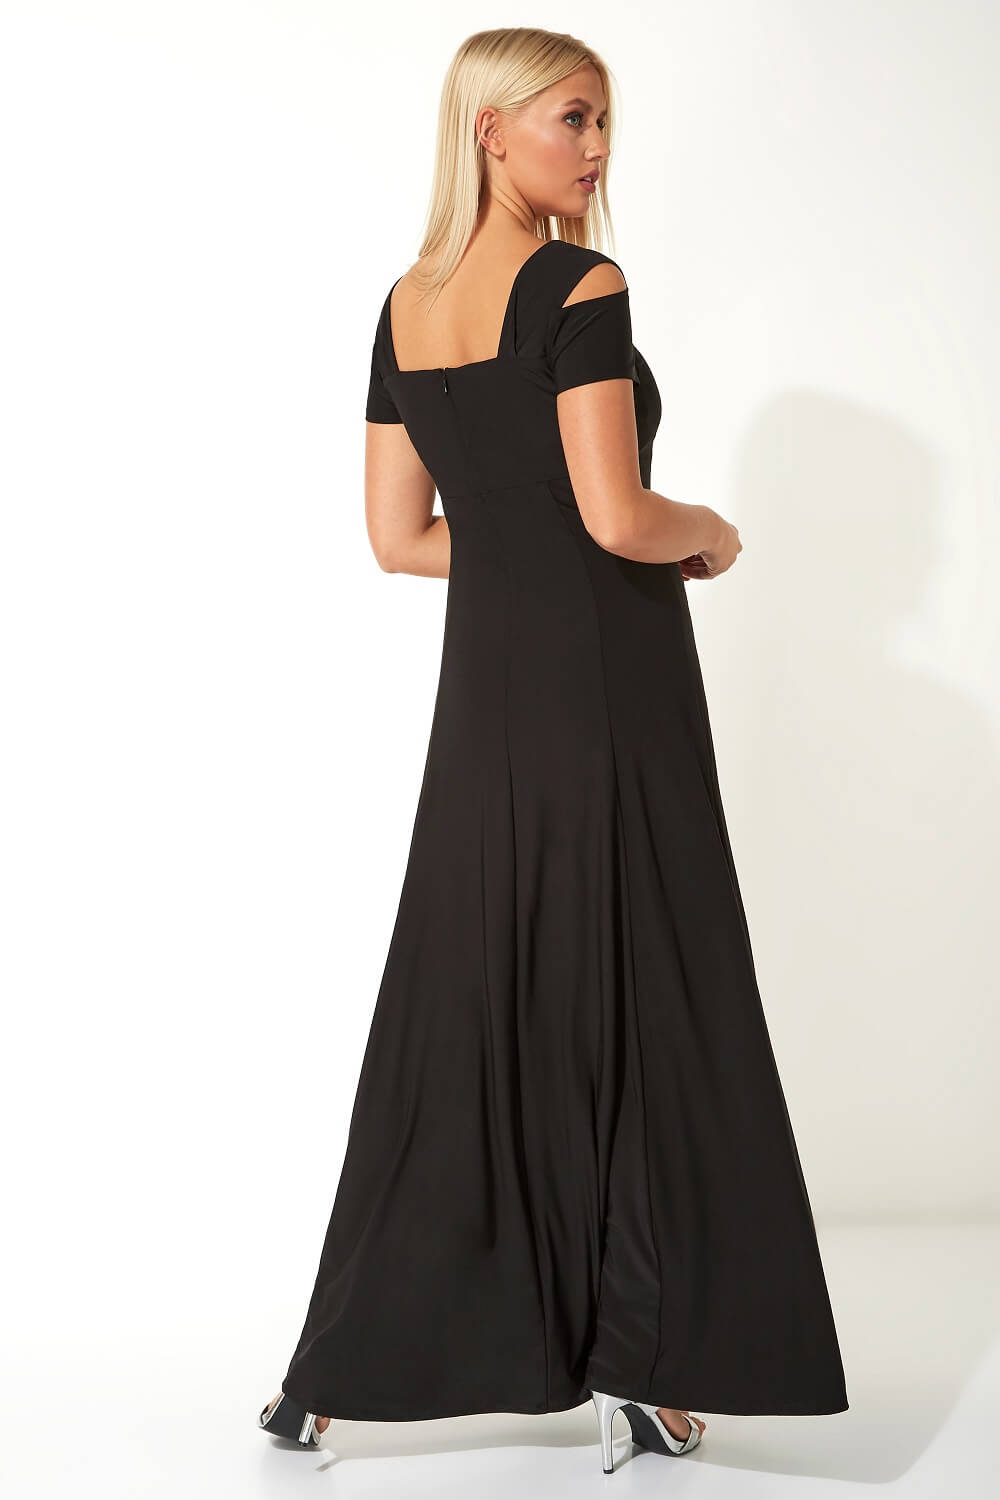 Black Gold Diamante Cold Shoulder Maxi Dress, Image 2 of 4